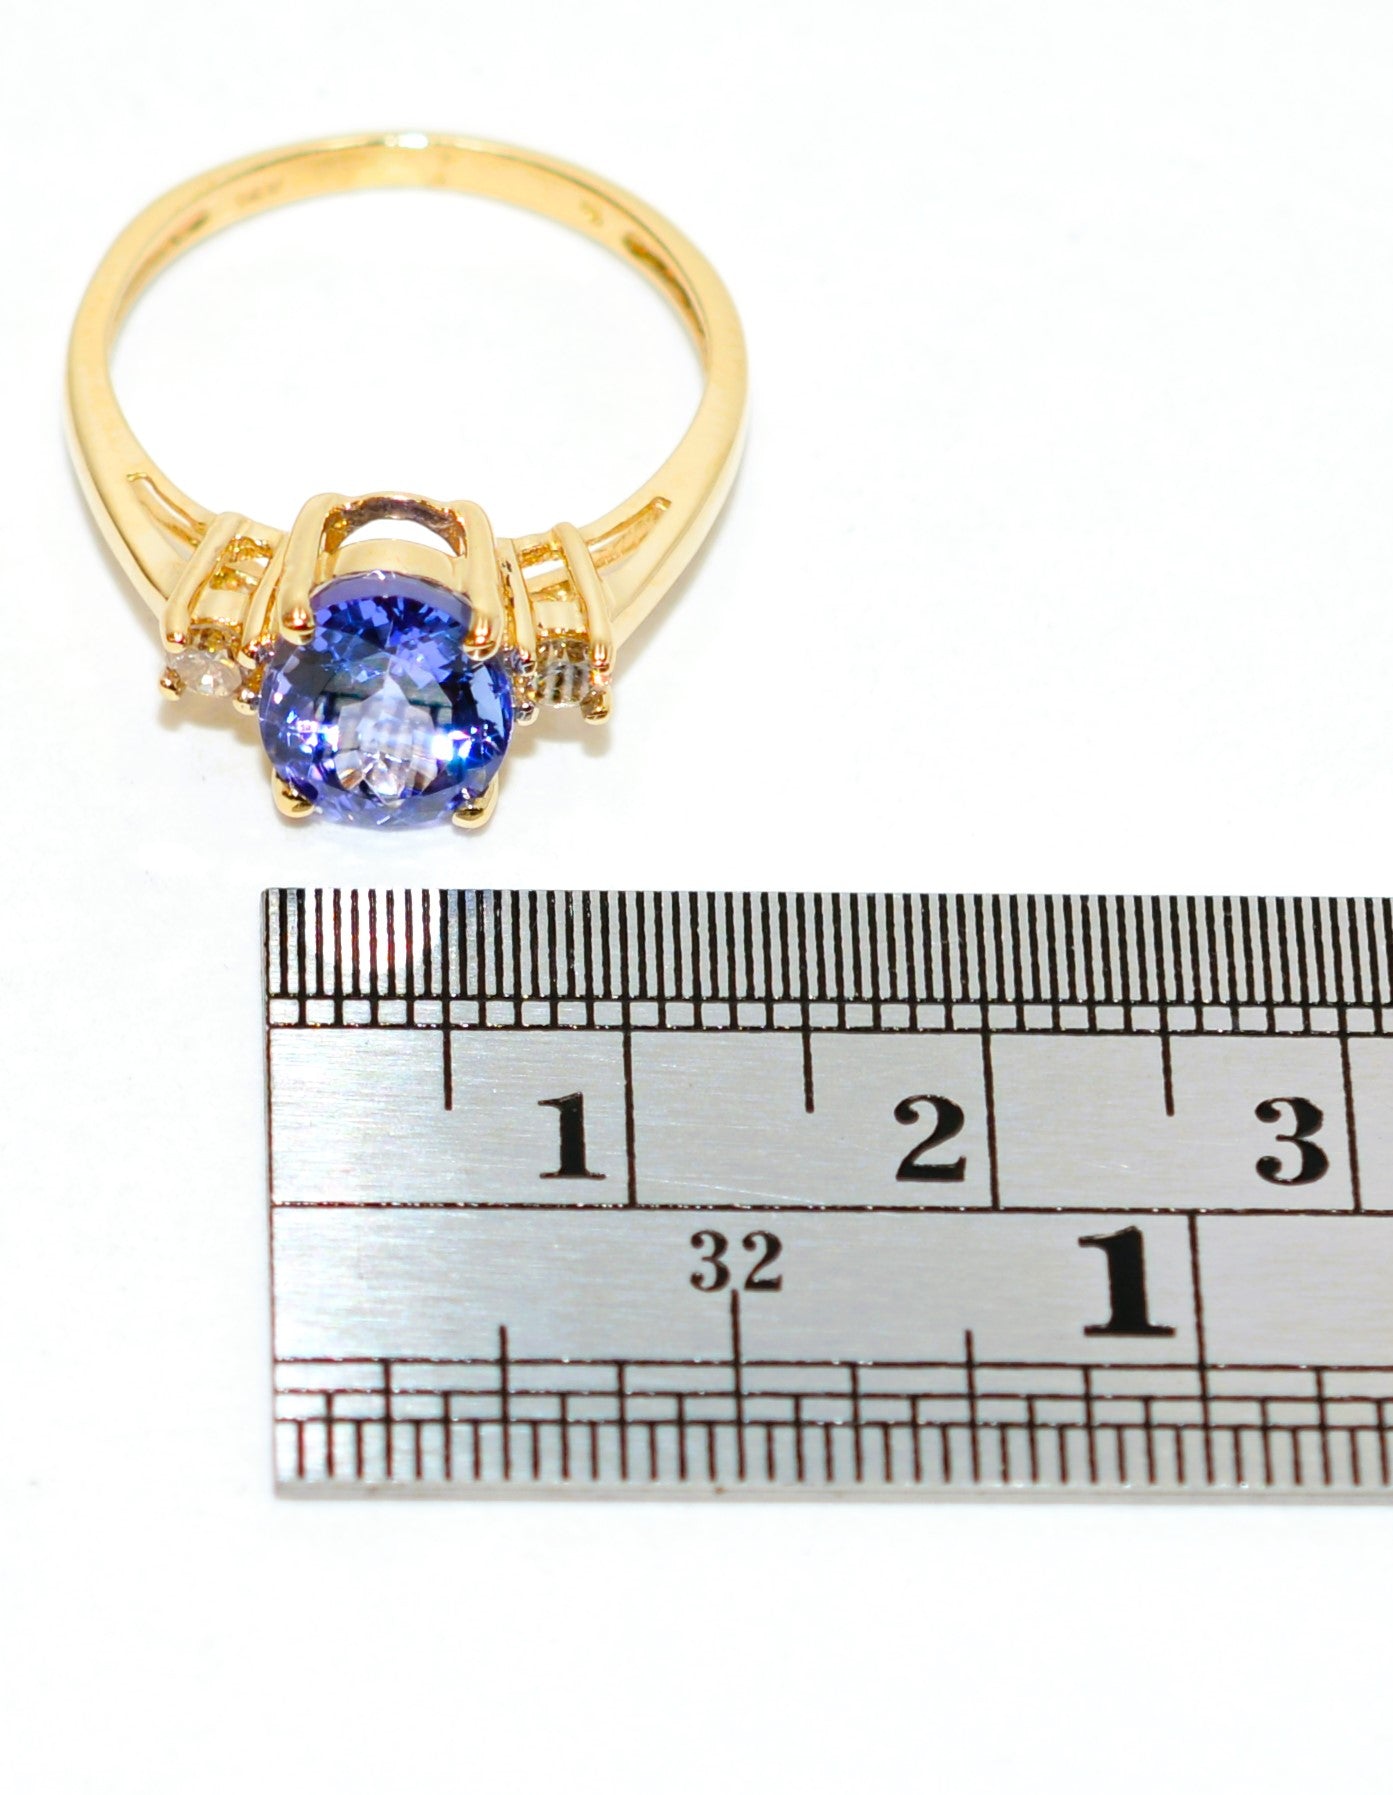 Natural Tanzanite & Diamond Ring 14K Solid Gold 2.86tcw Gemstone Ring Birthstone Ring Engagement Ring Cocktail Ring Estate Jewellery Blue